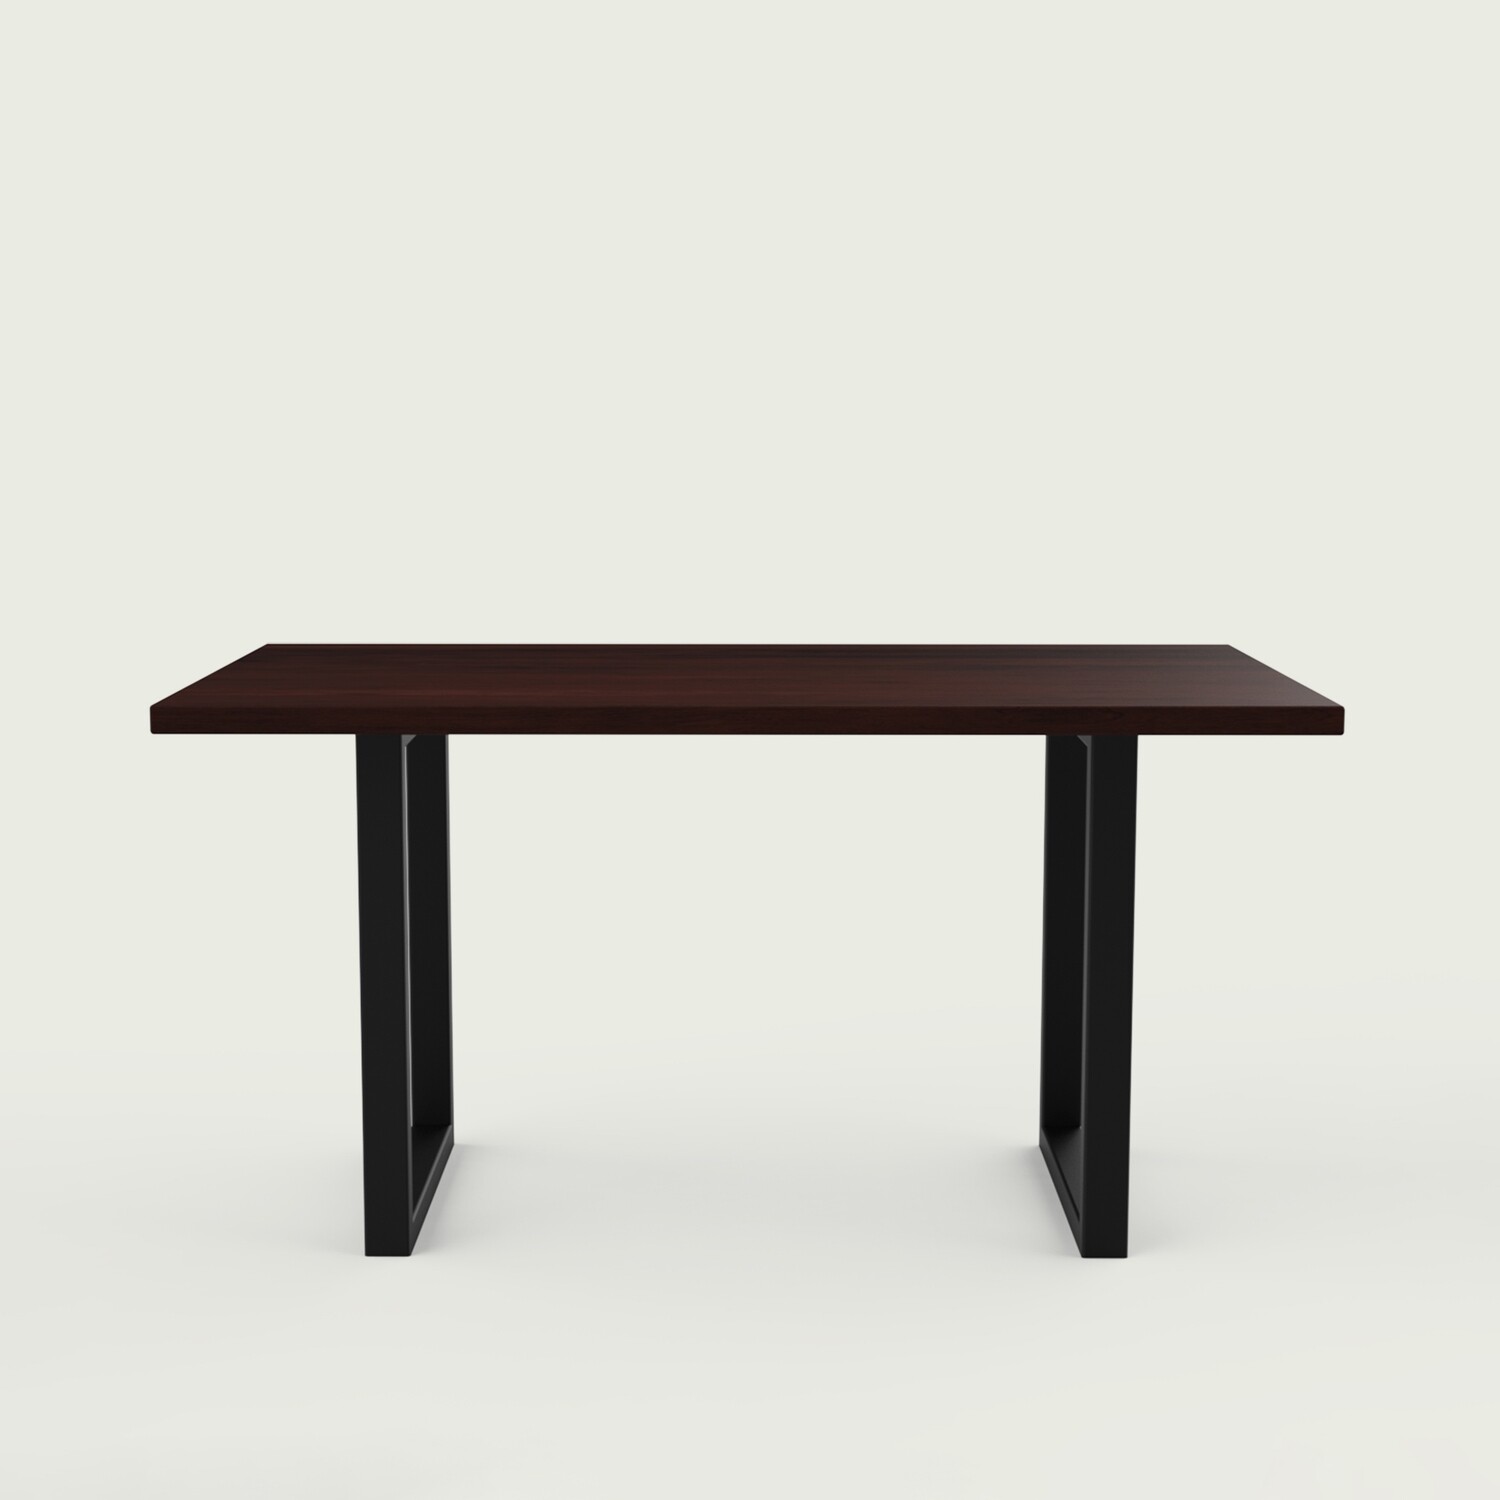 Plaza Walnut Luxury Dining Table - 6 Seater/150 cm